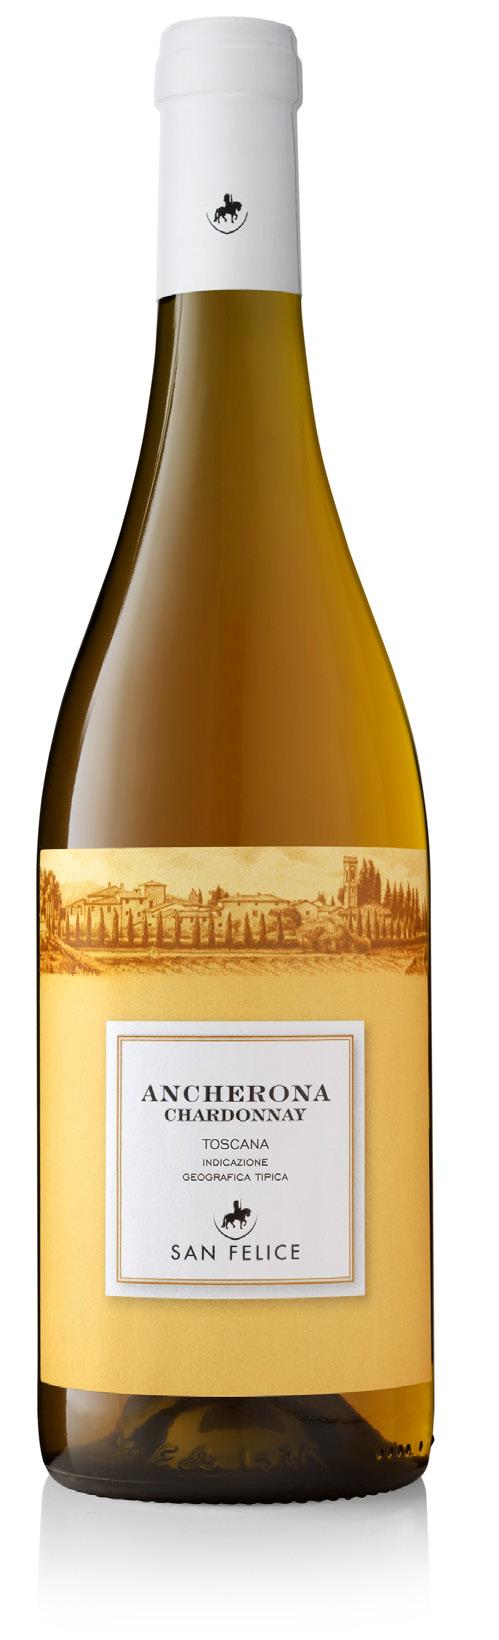 SAN FELICE WHITE WINES BACK TO MENU Ancherona Chardonnay 2015 glass 8 bottle 30 Chardonnay 90% Sauvignon Blanc e Semillon 10% Deep straw yellow.